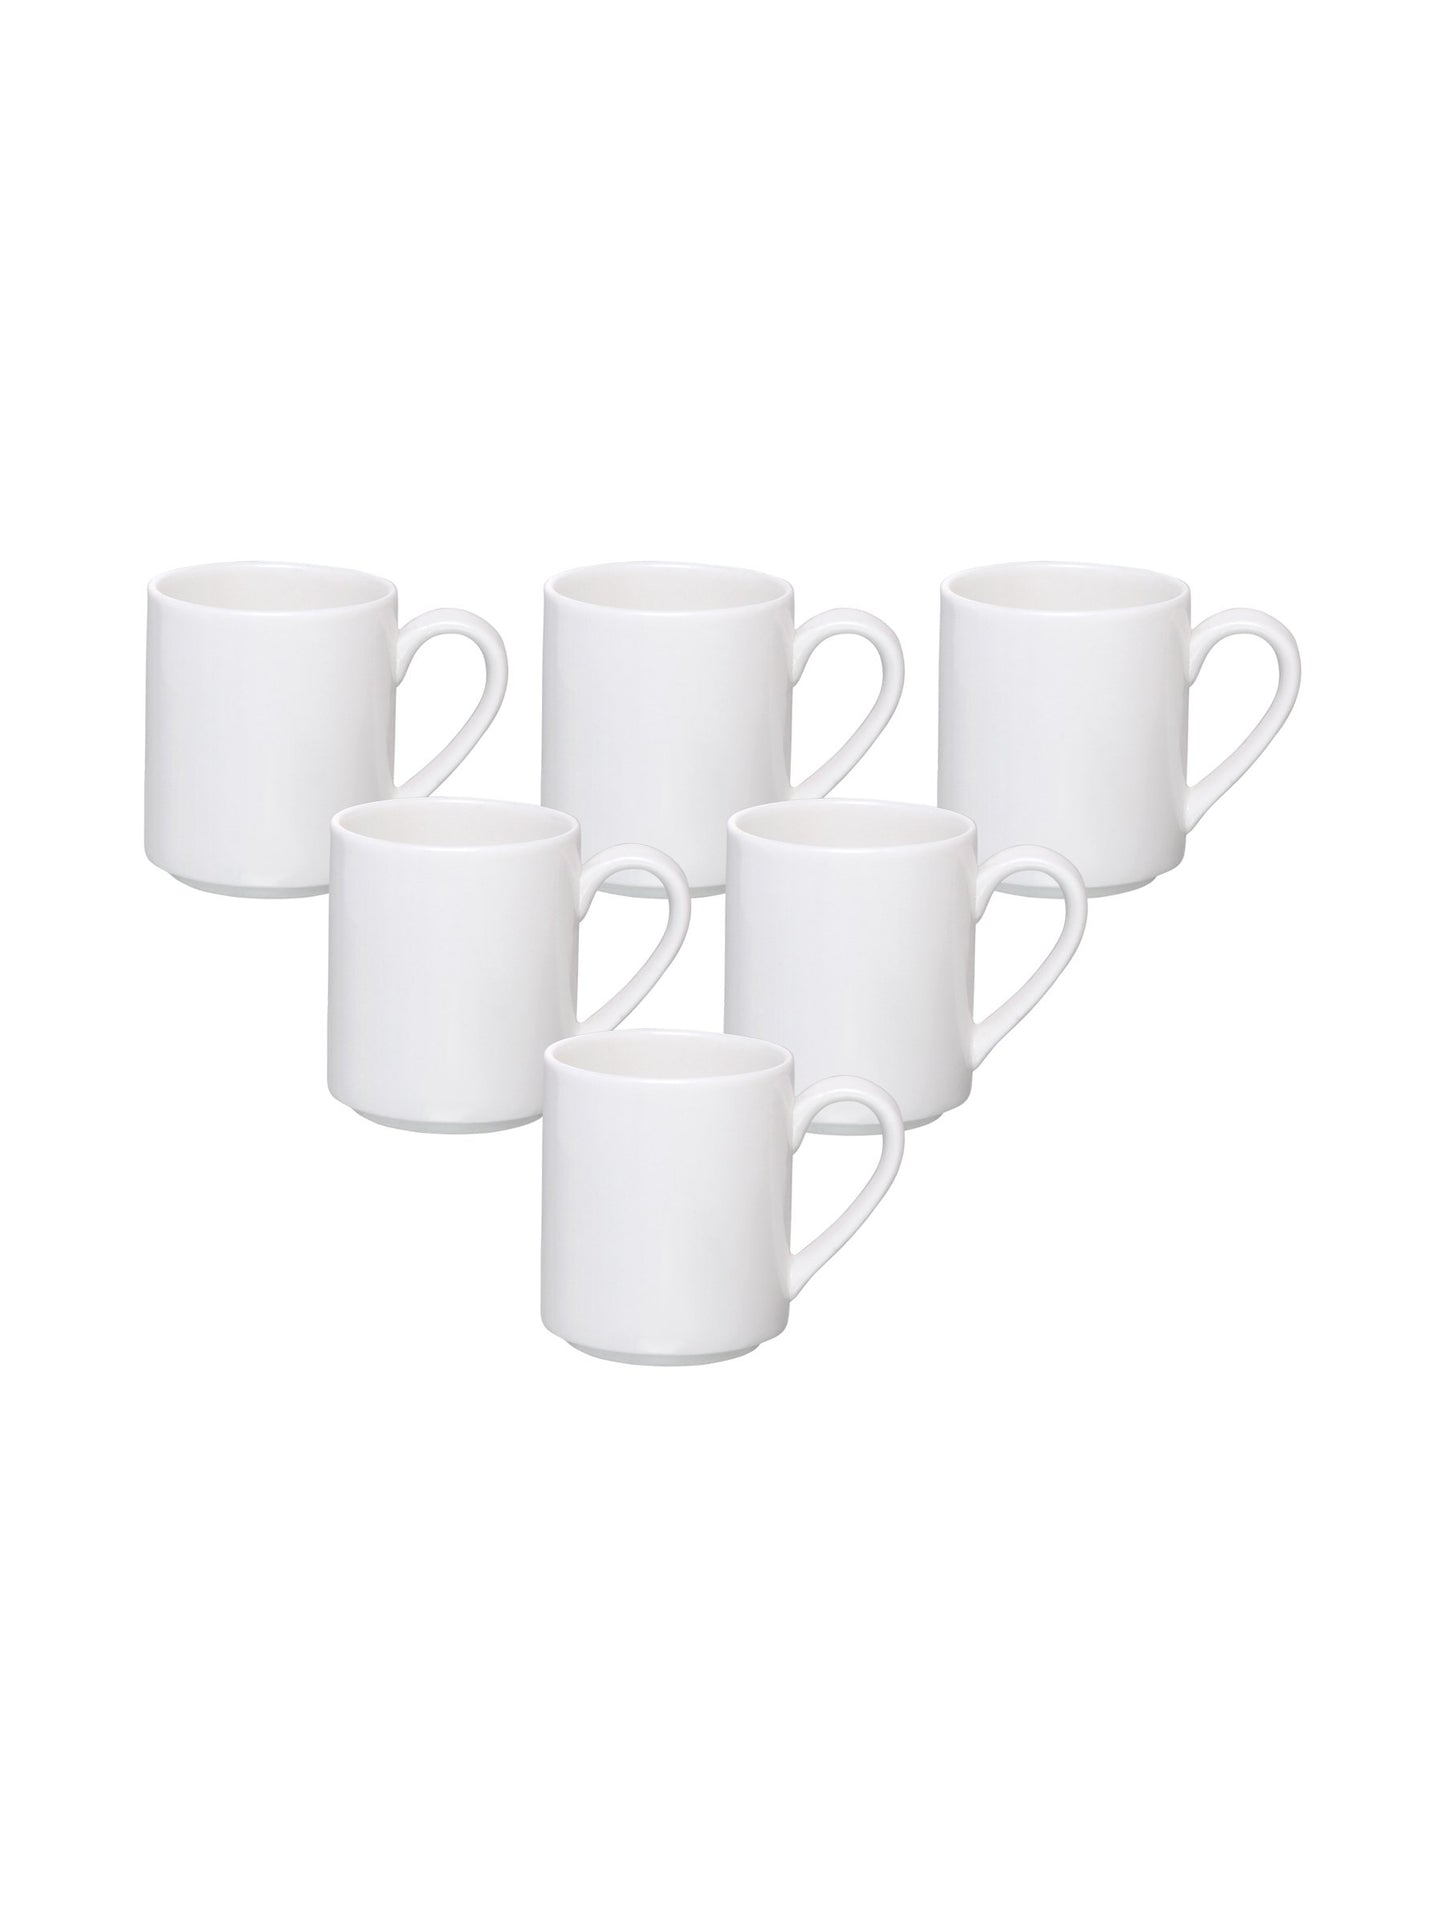 Clay Craft Basic Stacko Small Coffee & Tea Mugs, Set of 6, Plain White - Clay Craft India